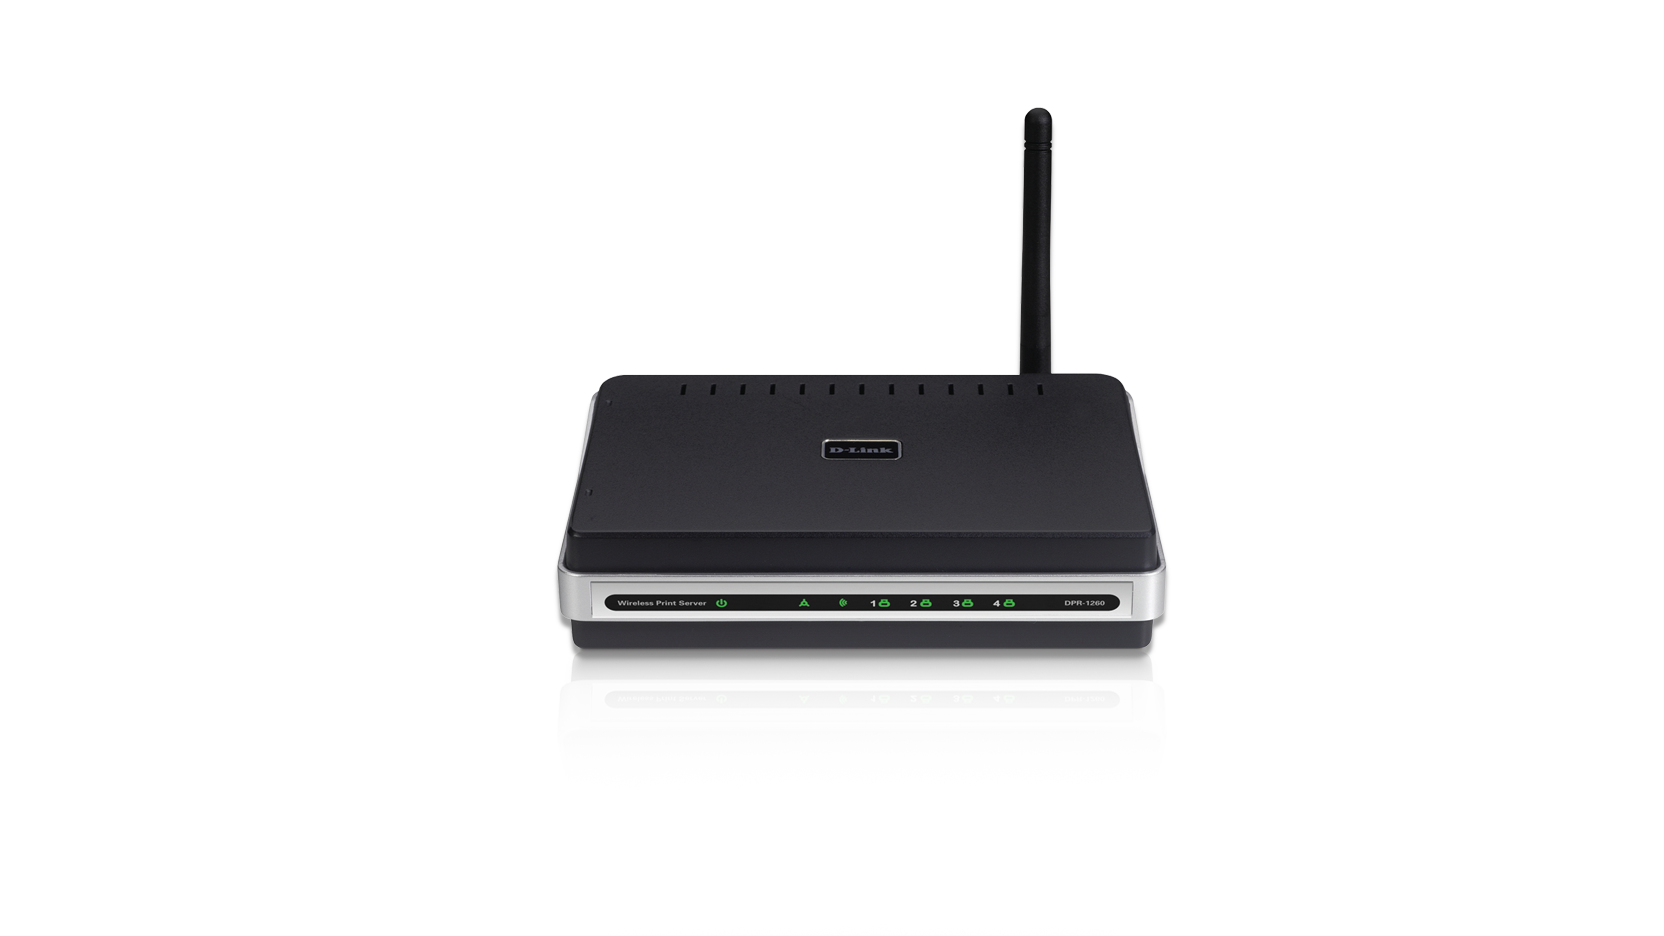 DPR-1260 Wireless 108Mbps Multi-Function Print Server, 4 USB 2.0 Ports